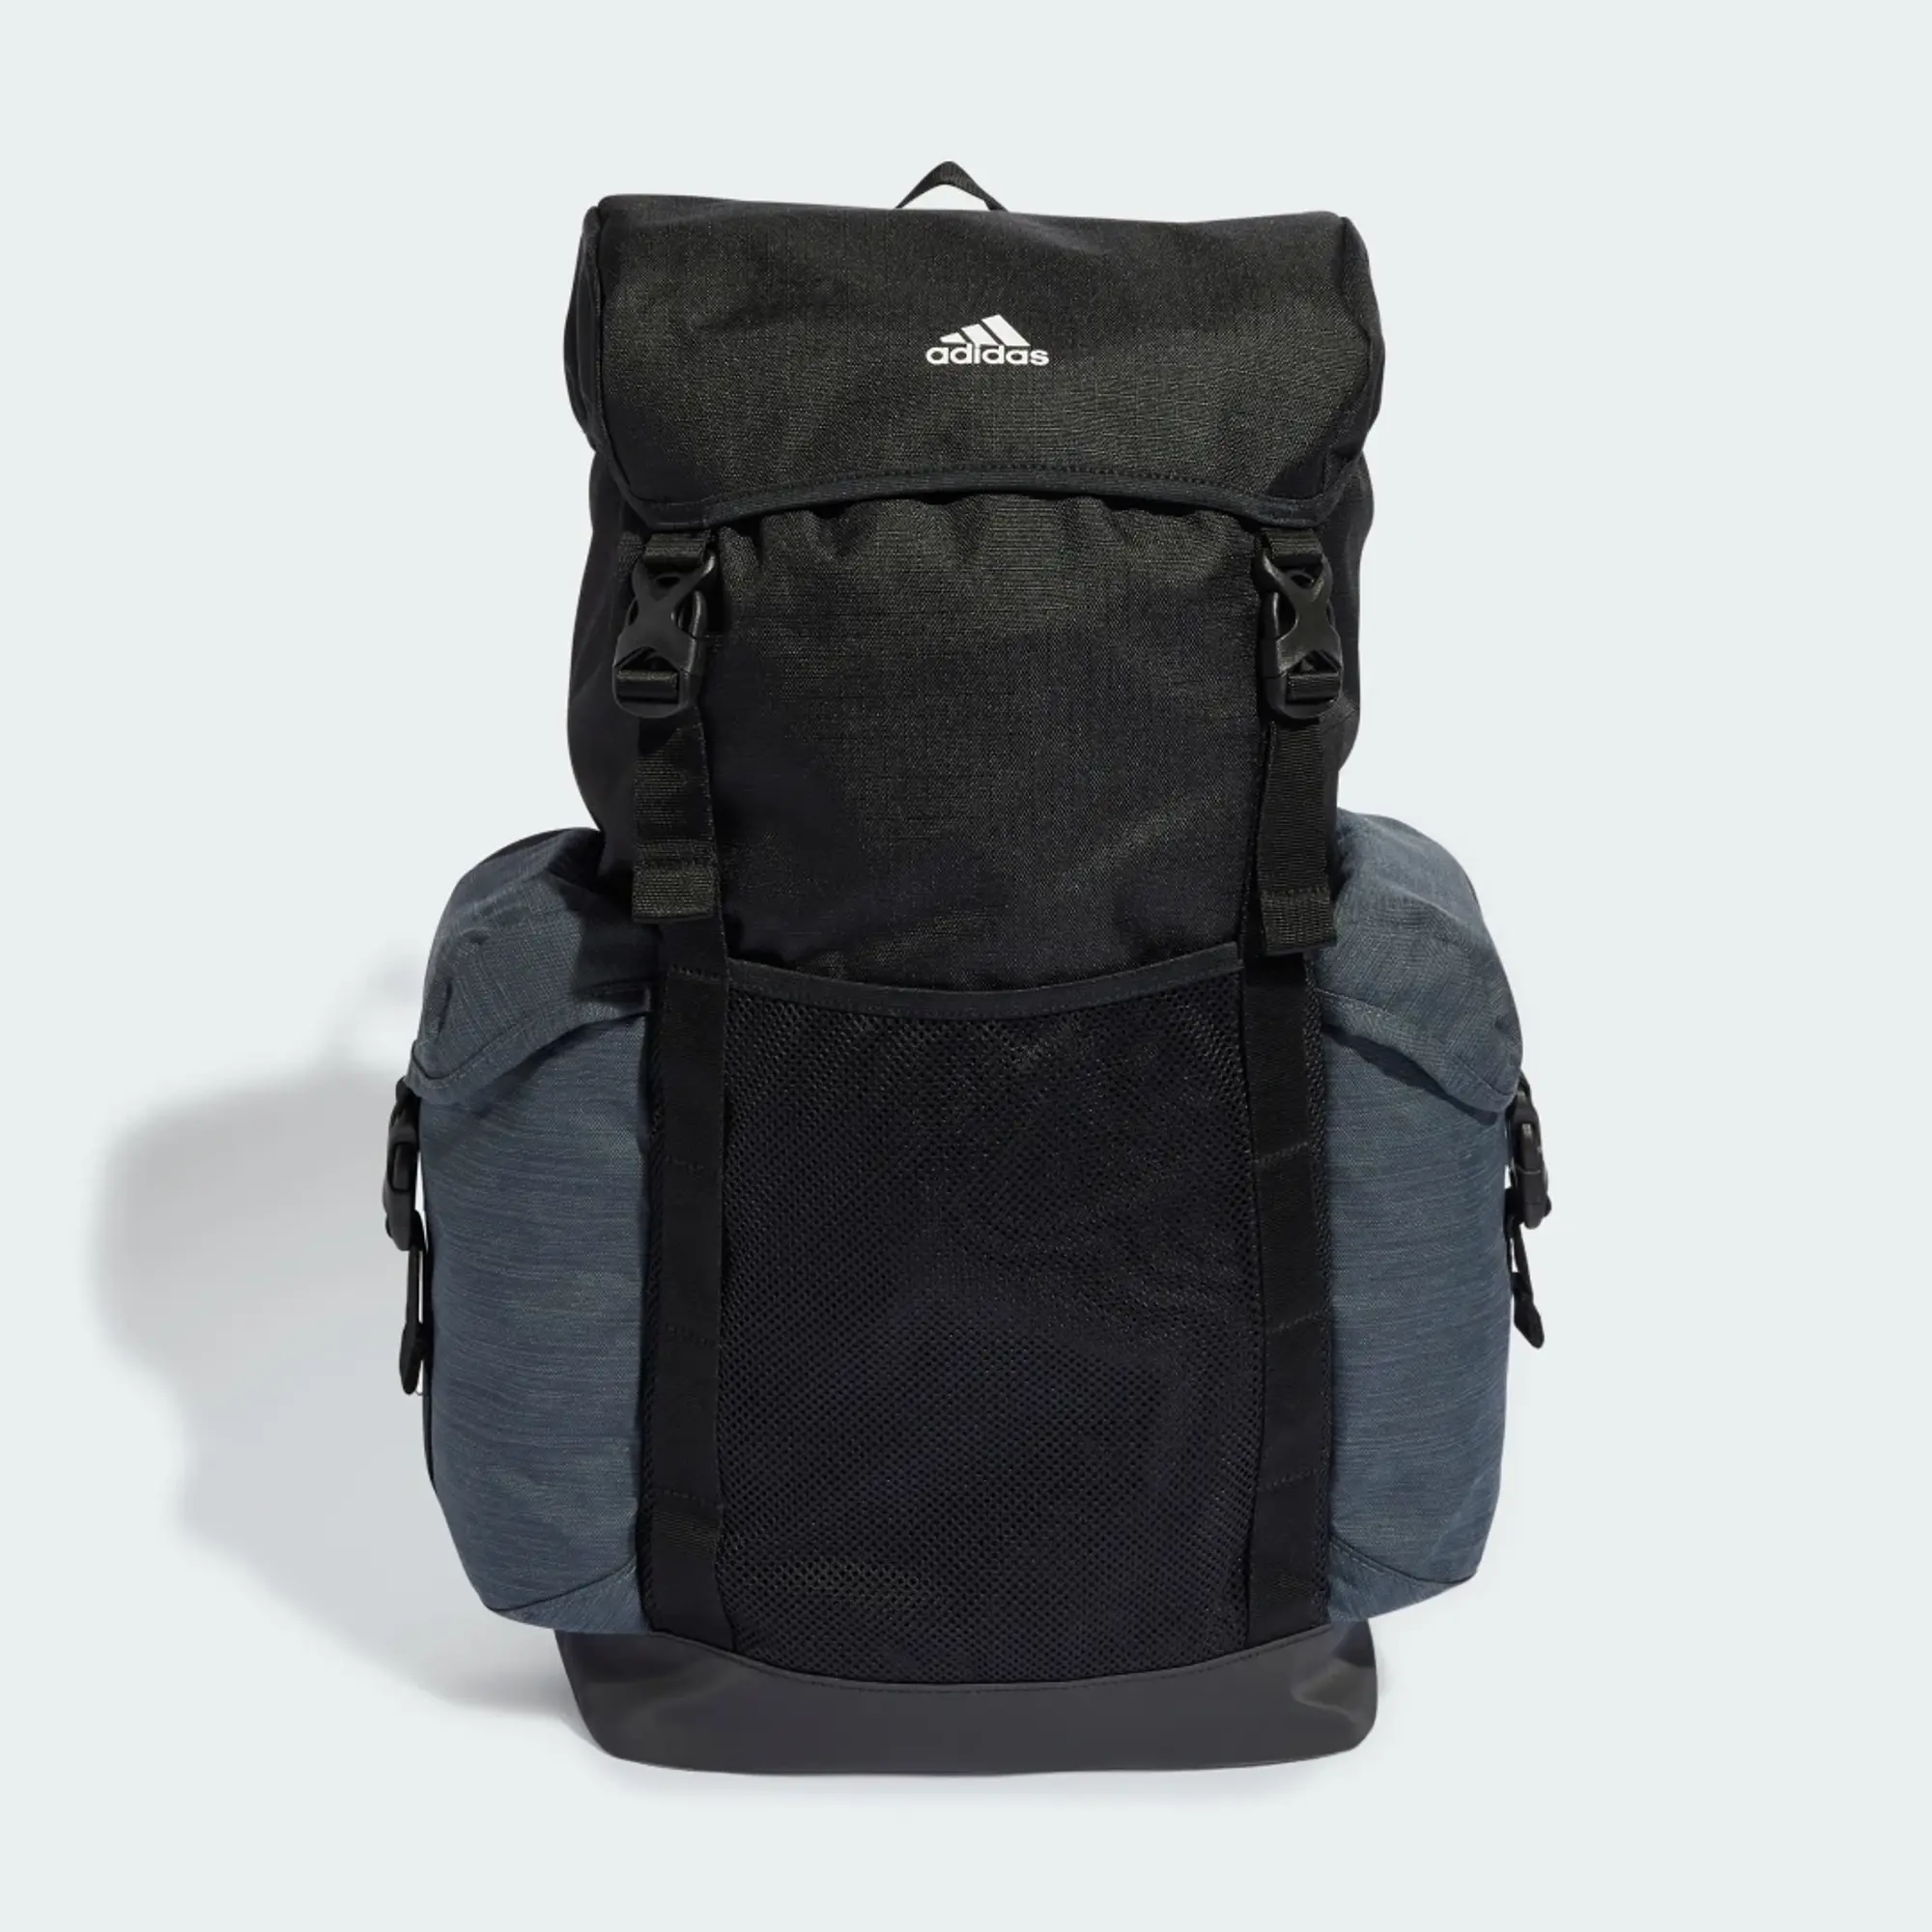 Adidas Xplorer Backpack -